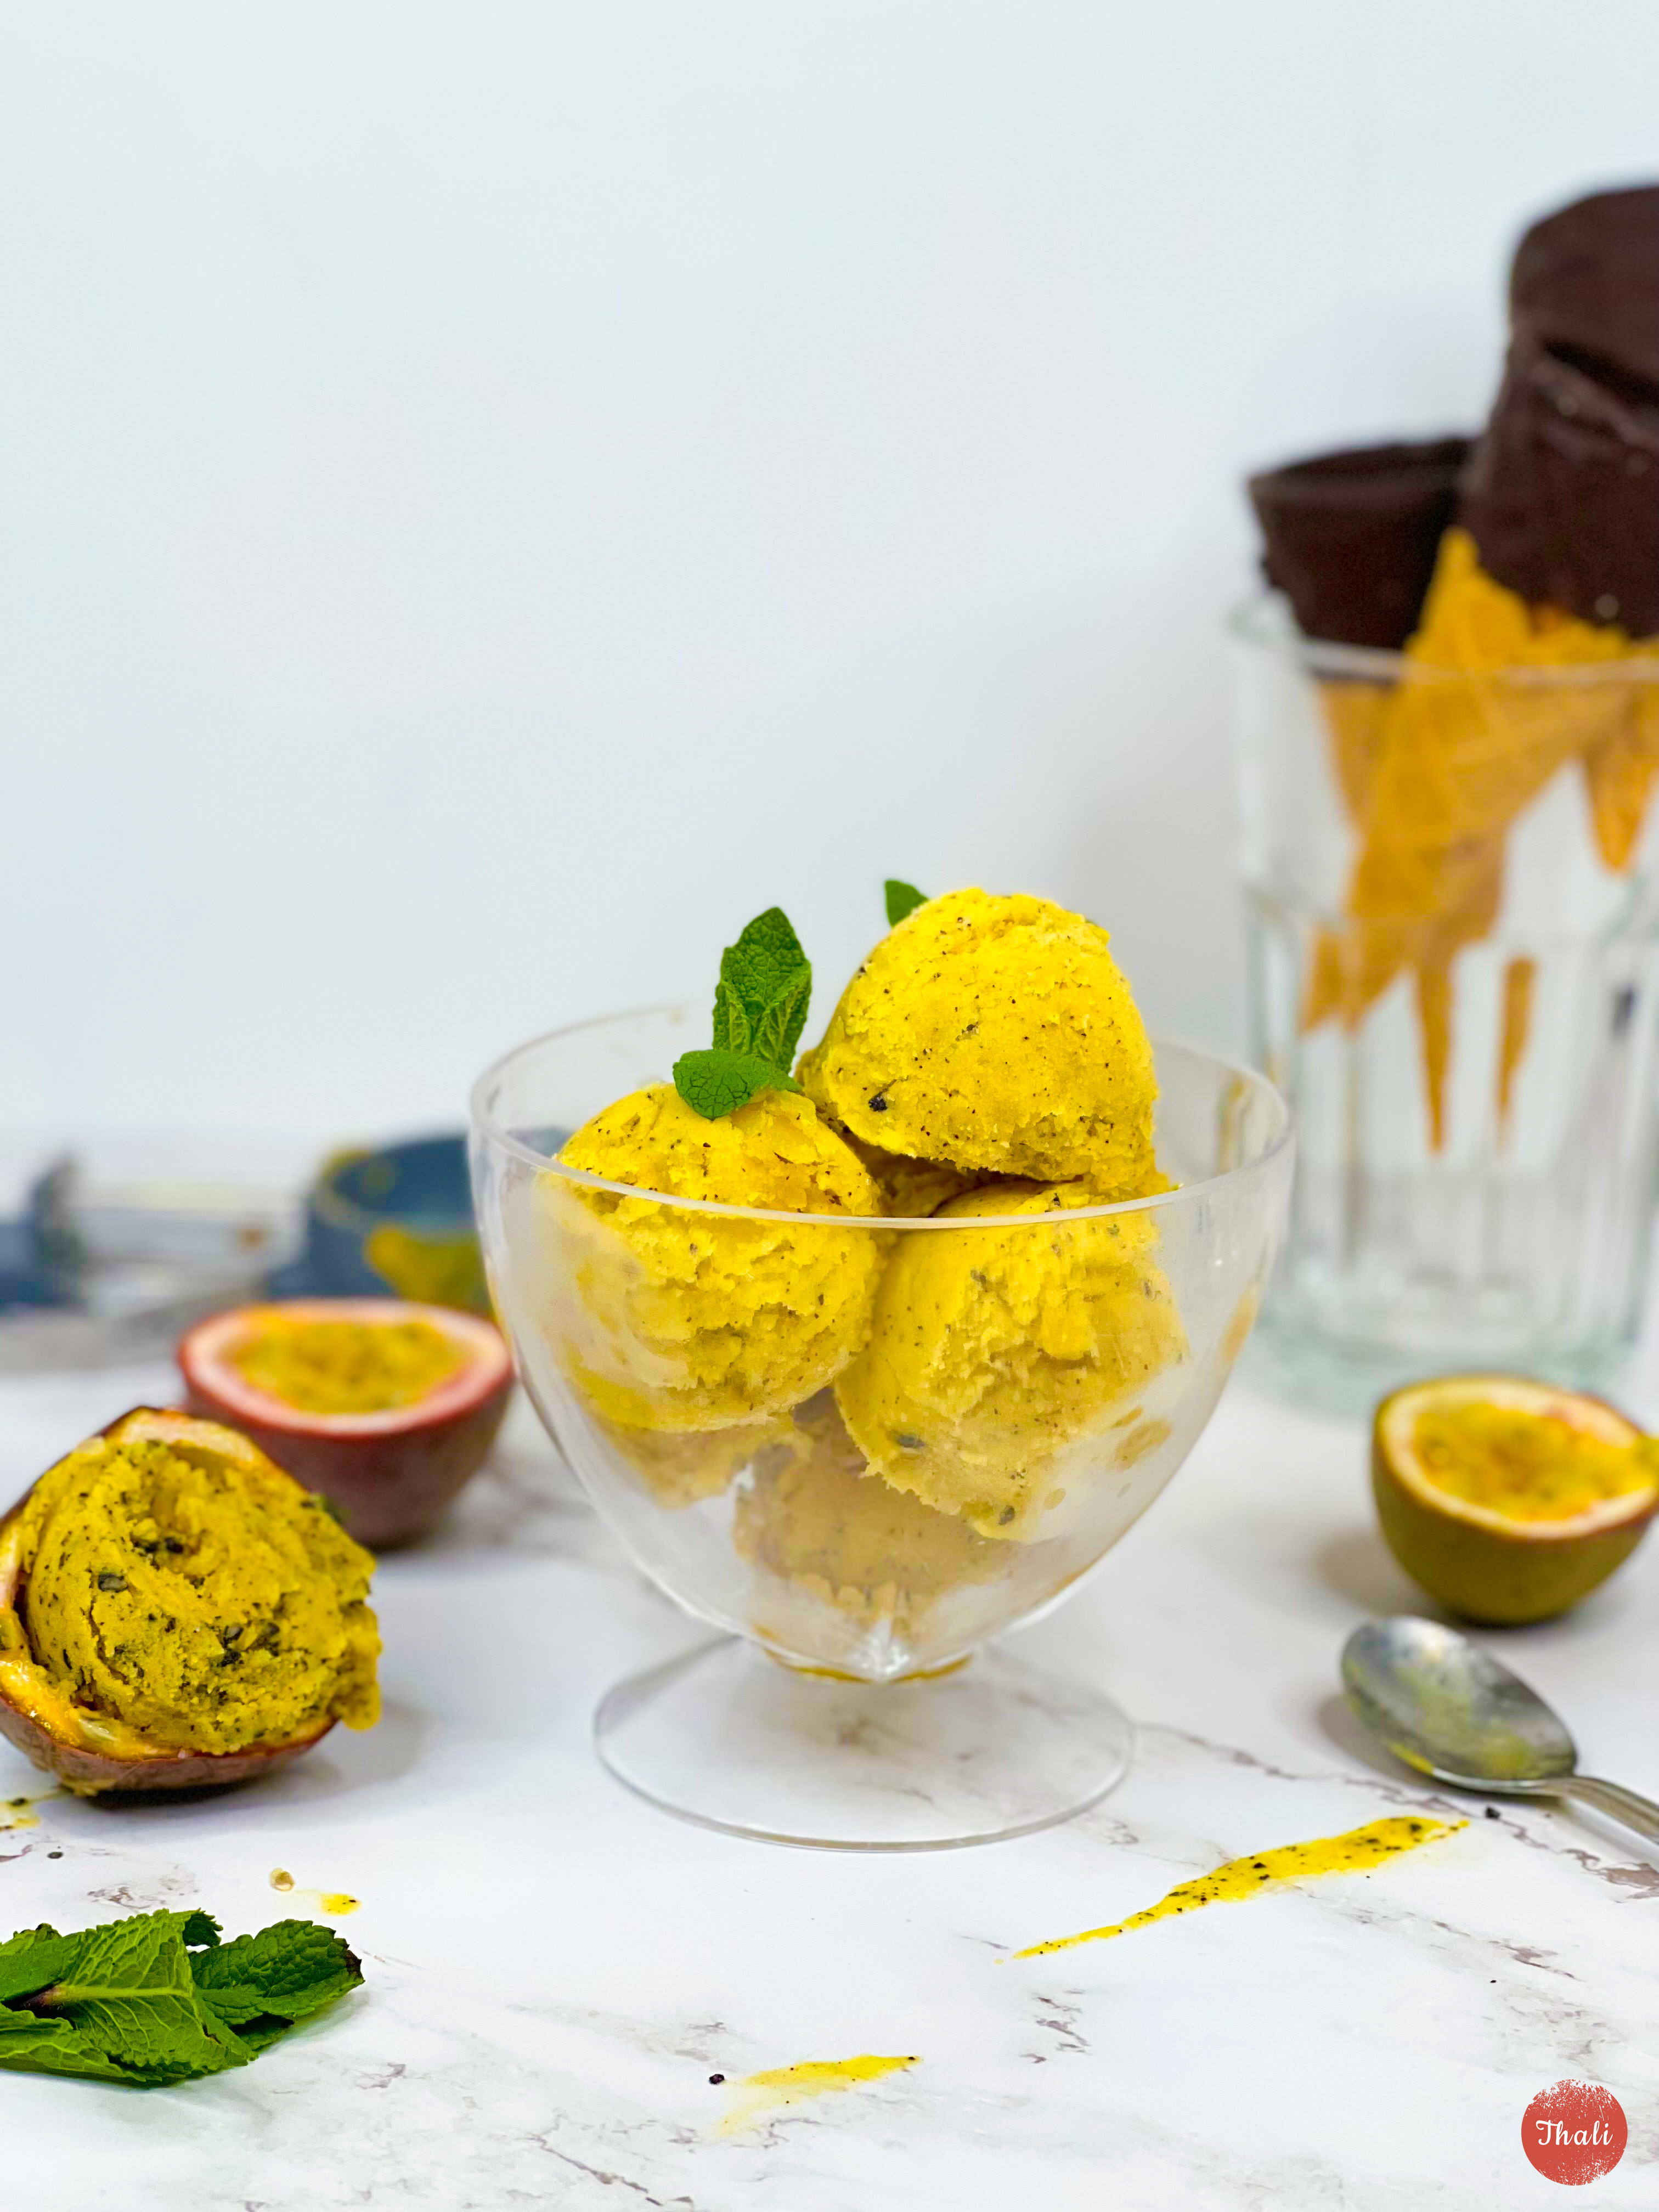 Passionfruit Sorbet – Ninja Ice Cream maker